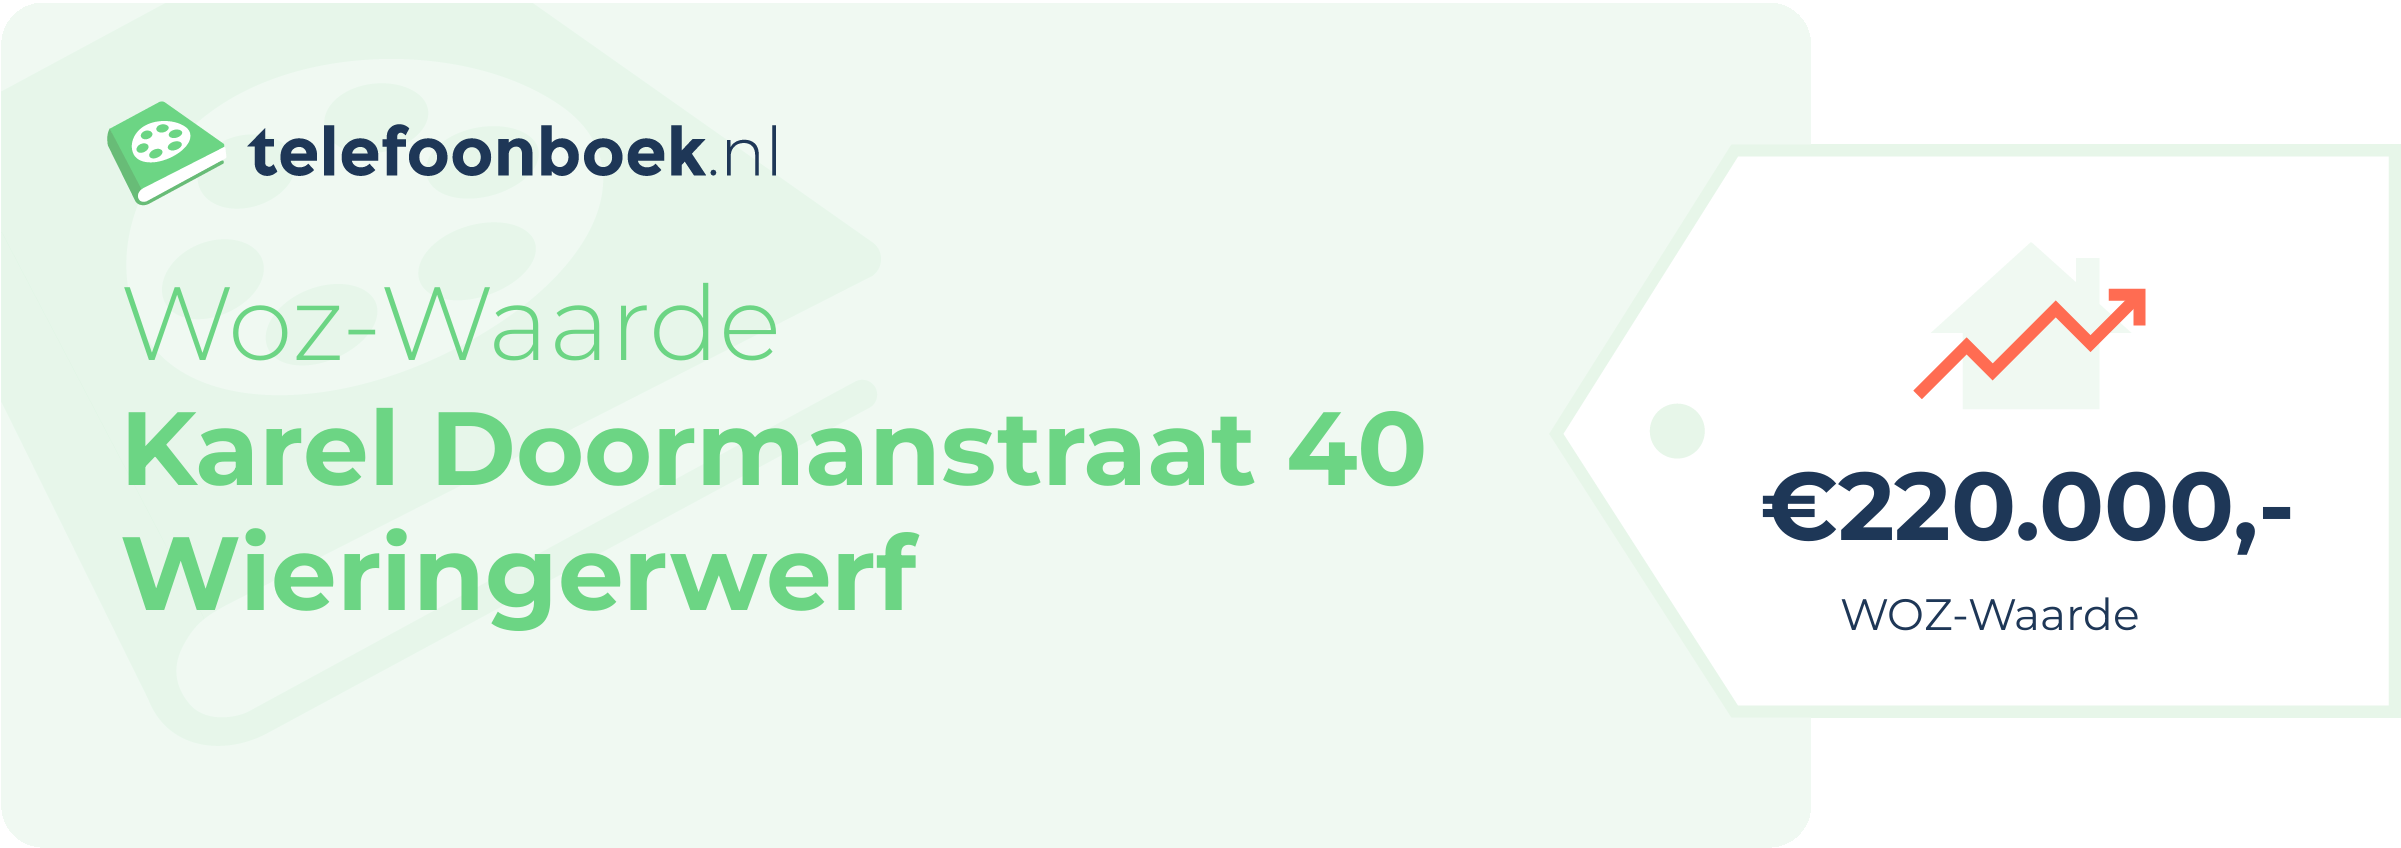 WOZ-waarde Karel Doormanstraat 40 Wieringerwerf